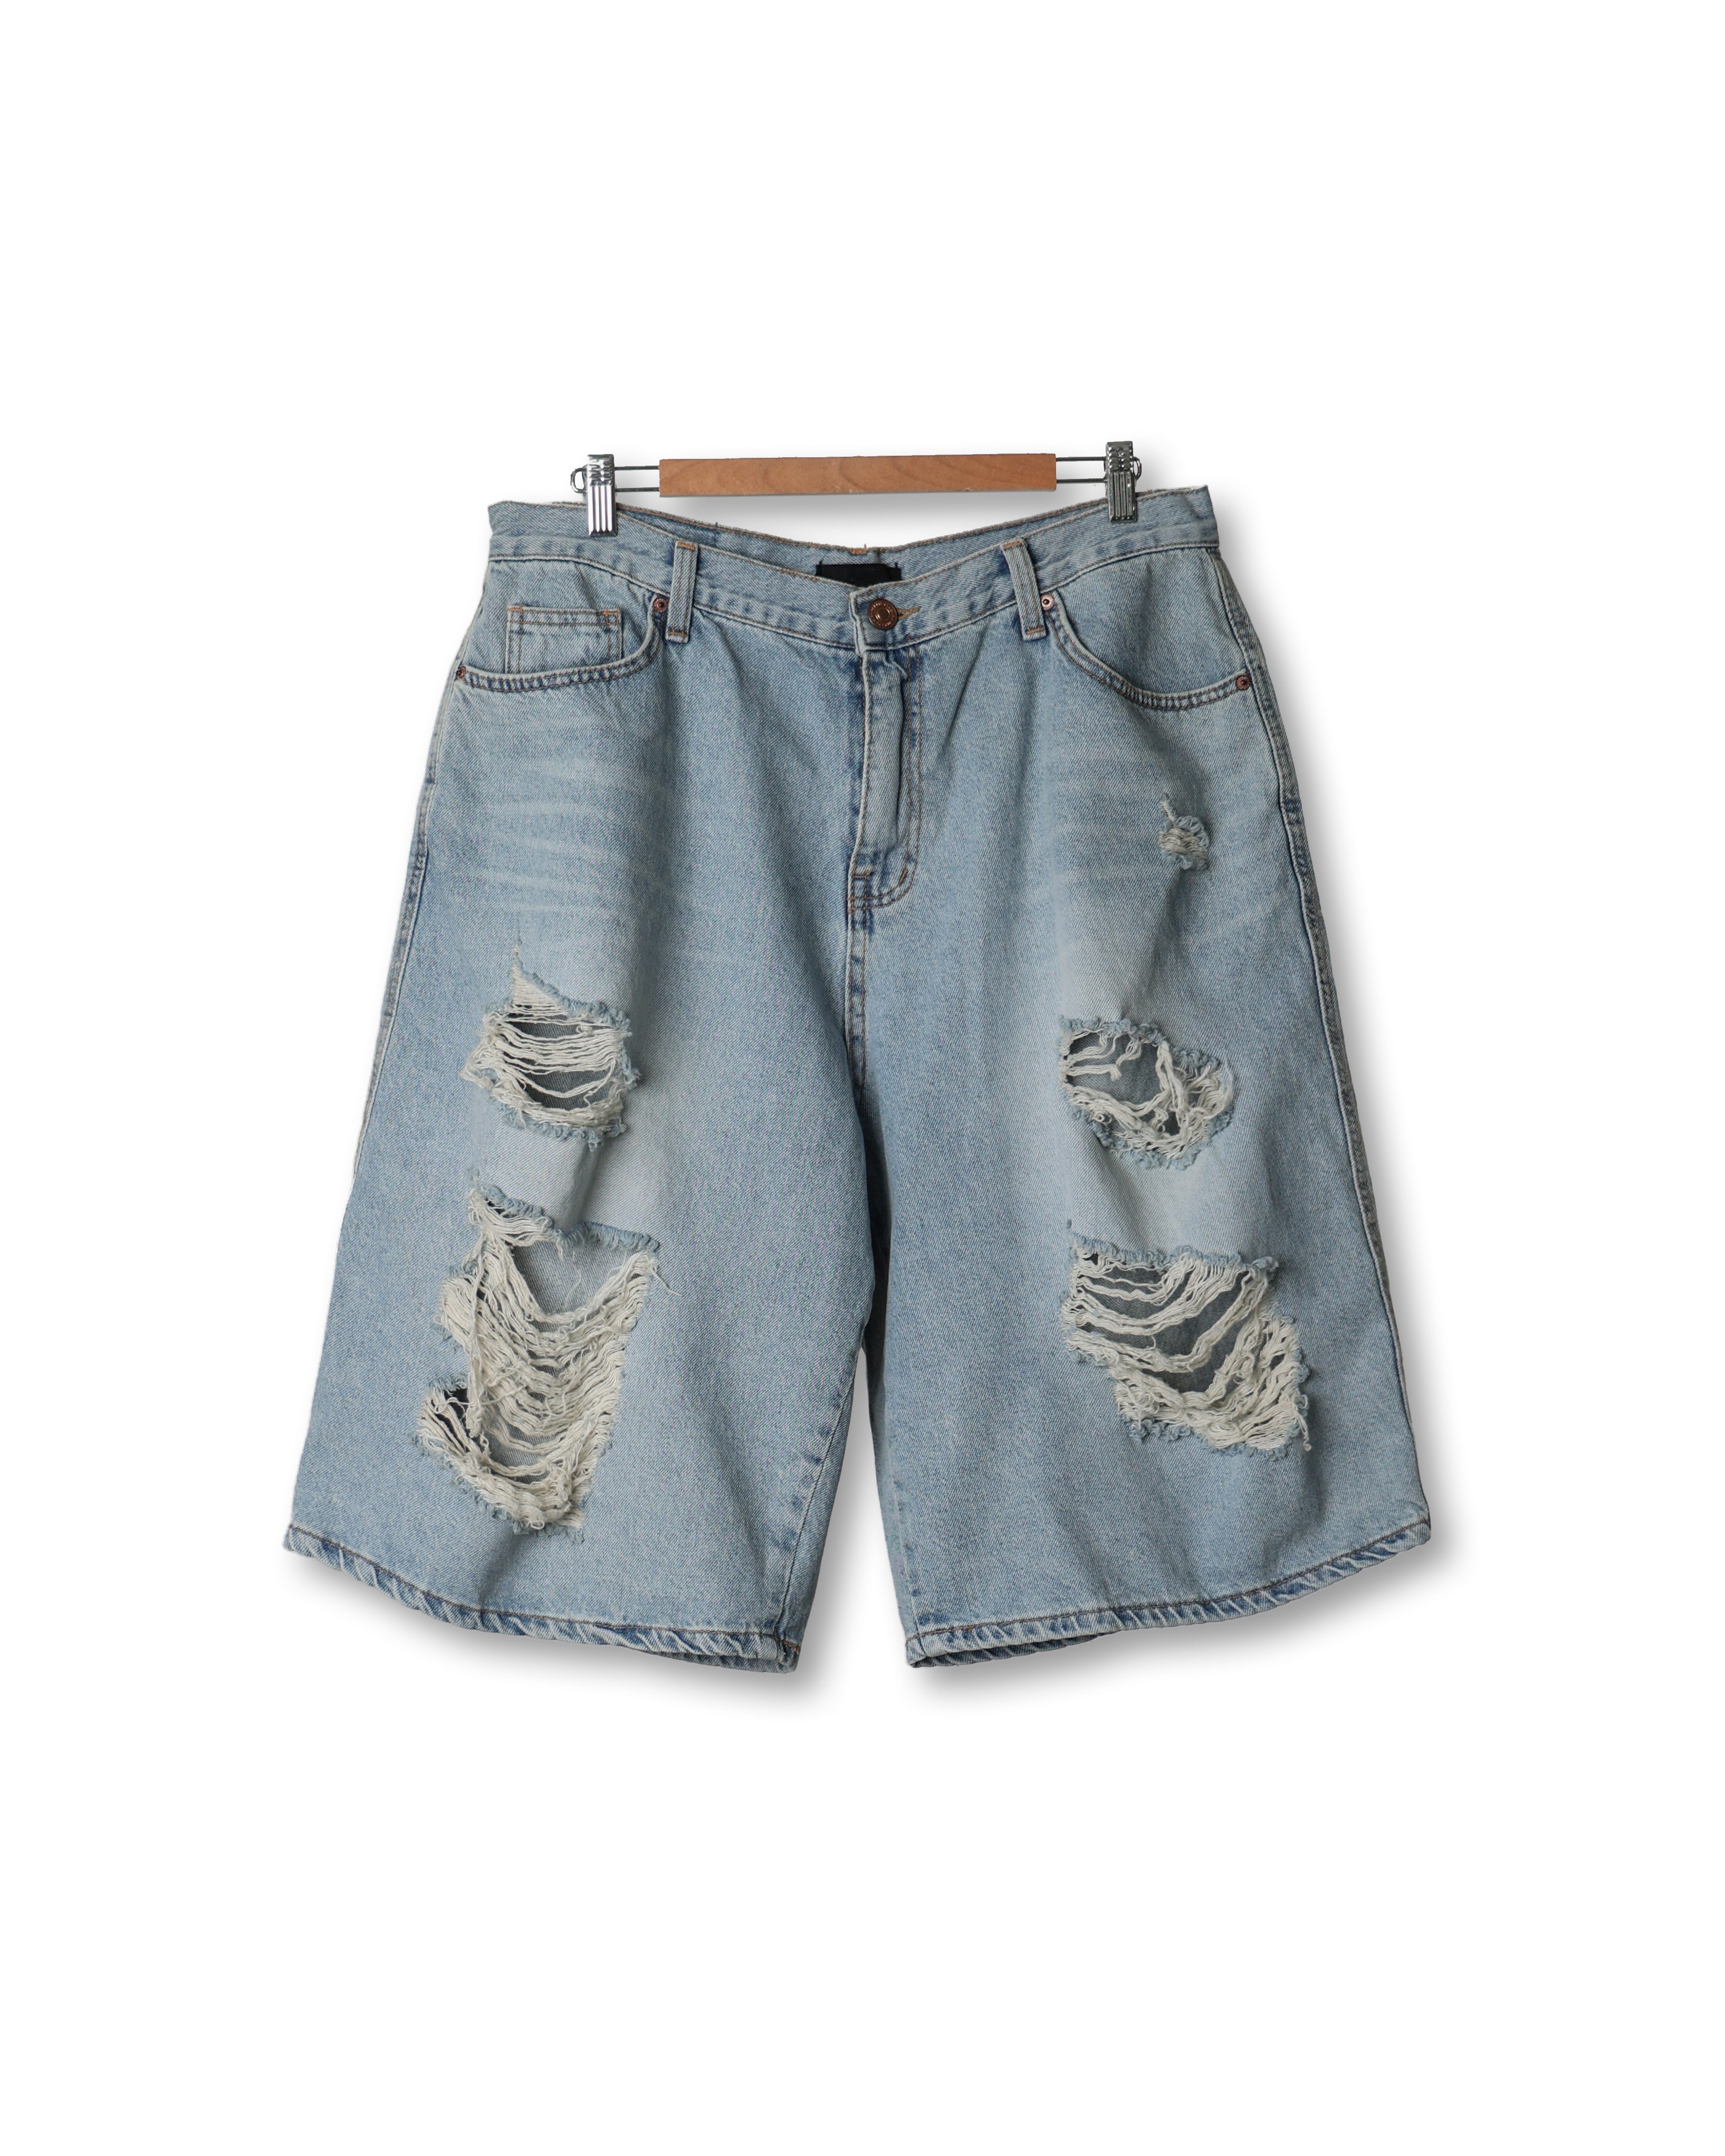 FITS 781 Vintage Detail Denim Bermuda Pants (Light Denim)